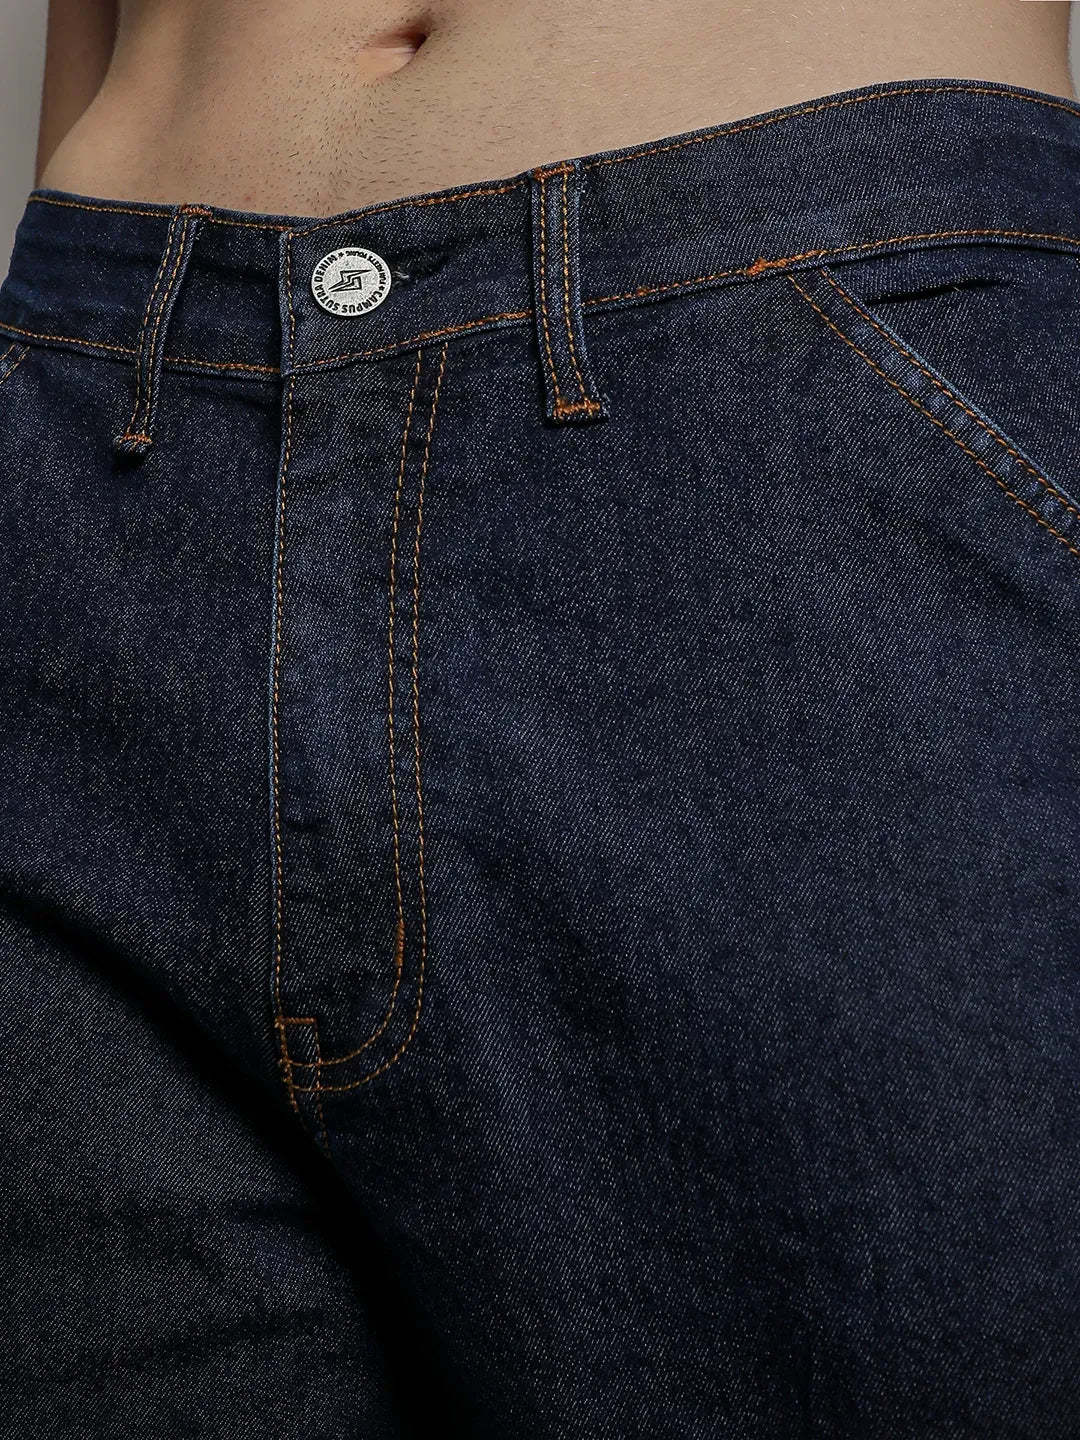 Men's Navy Blue Paneled Patch Pocket Denim Jeans